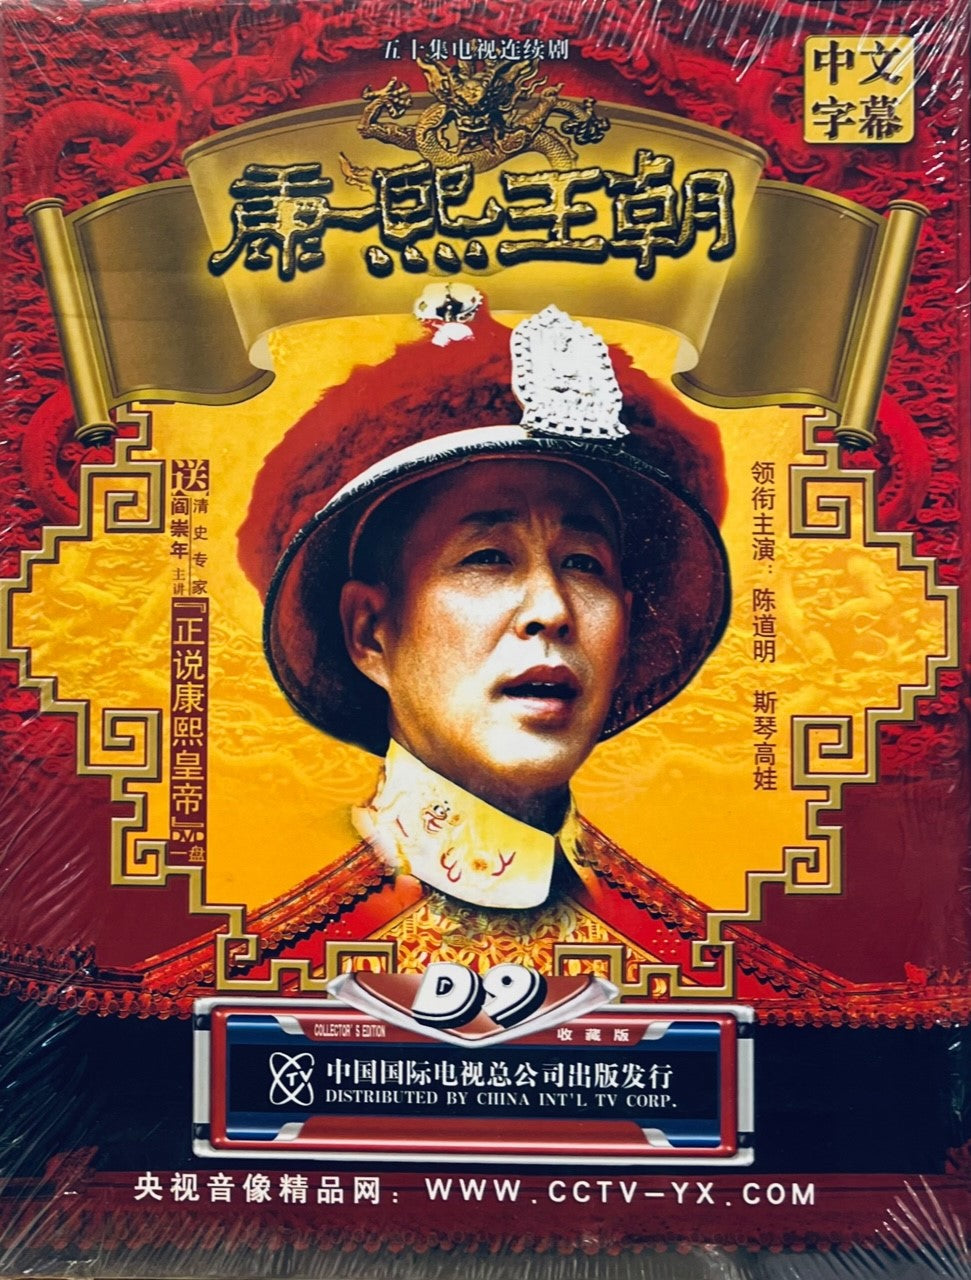 KANGXI KINGDOM 康熙王朝 2001 DVD (1-50 END) NON ENGLISH SUBSTITLE (REGION FREE)